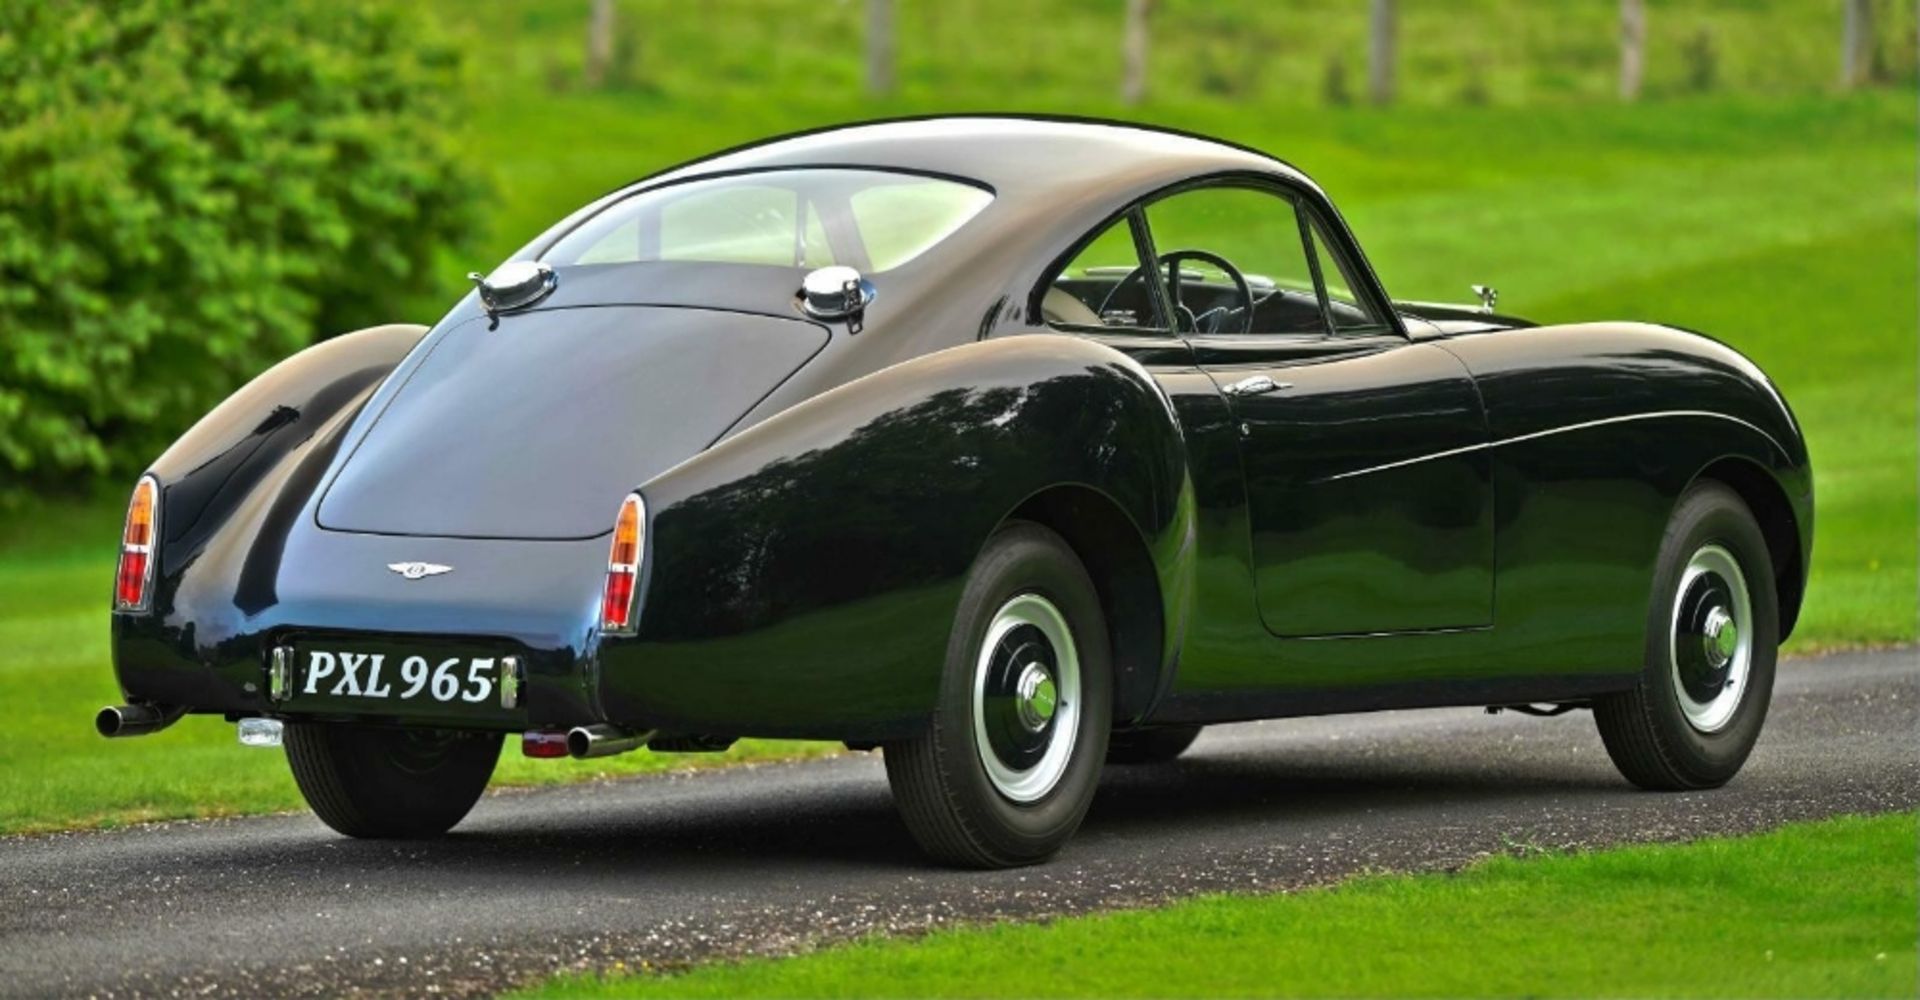 1955 BENSPORT LA SARTHE Registration Number: PXL 965 Chassis Number: B44ZY Recorded Mileage: 400 - Image 3 of 15